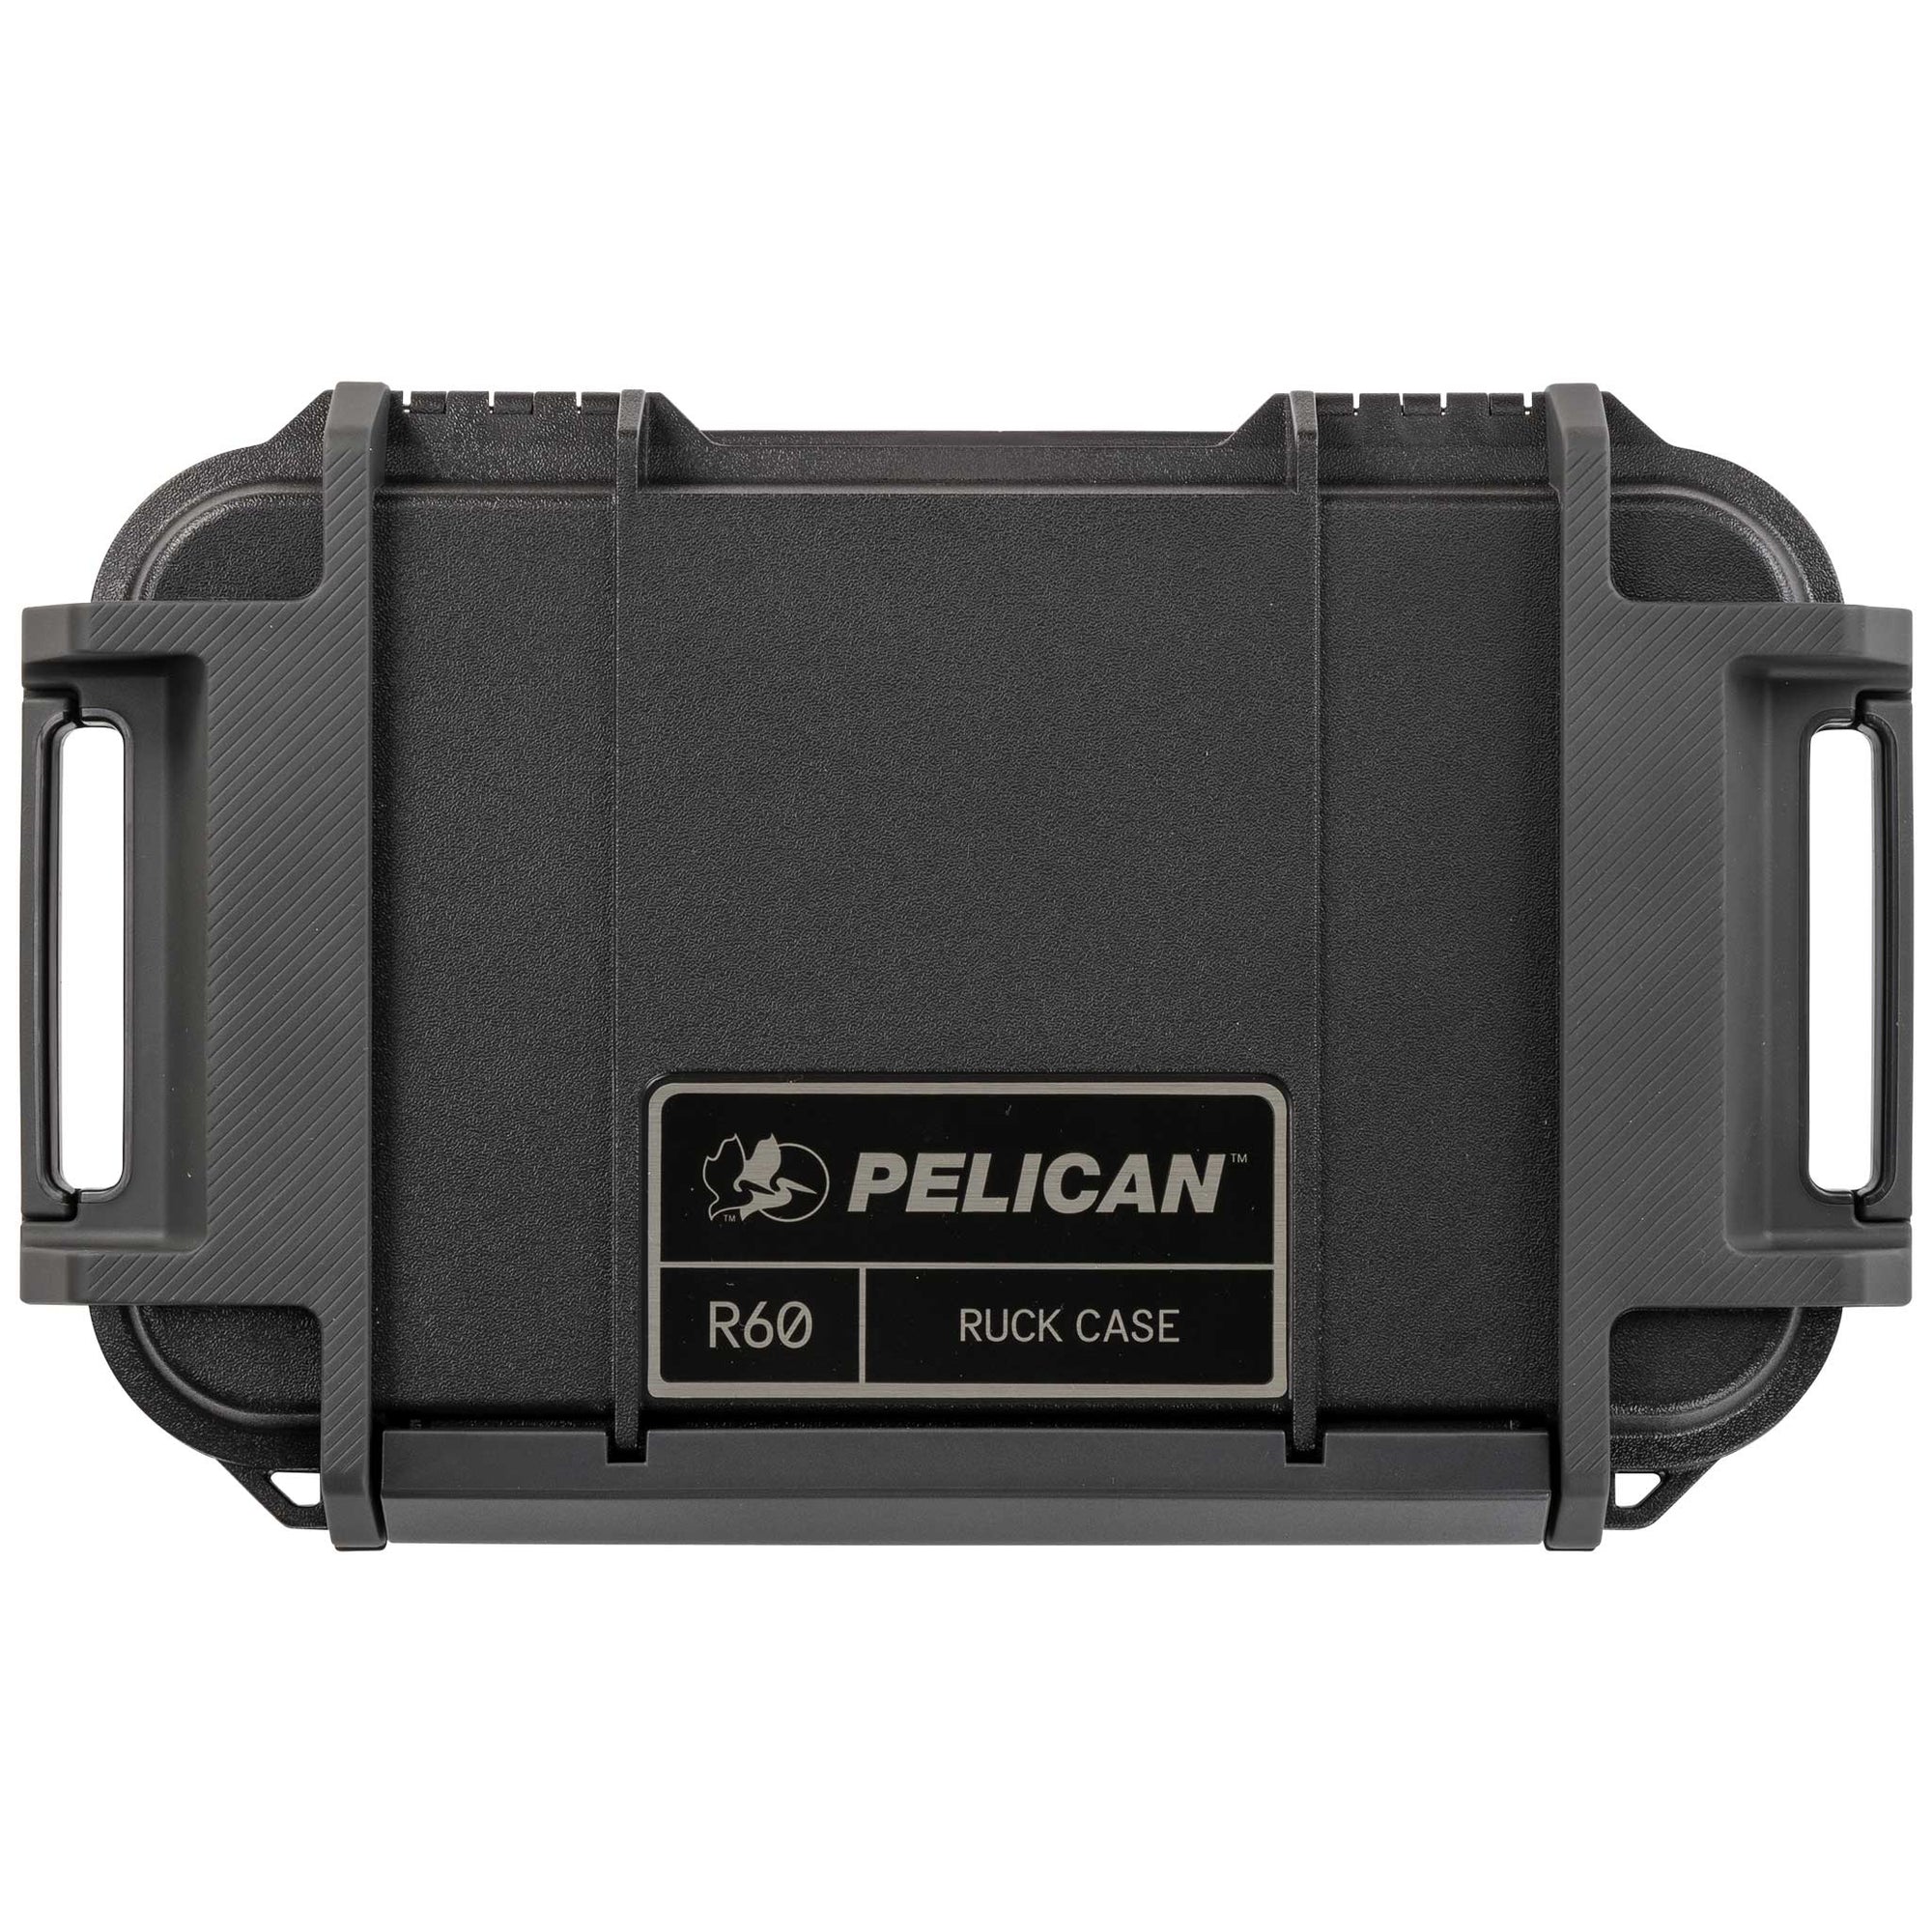 Pelican R60 waterproof ruck case black